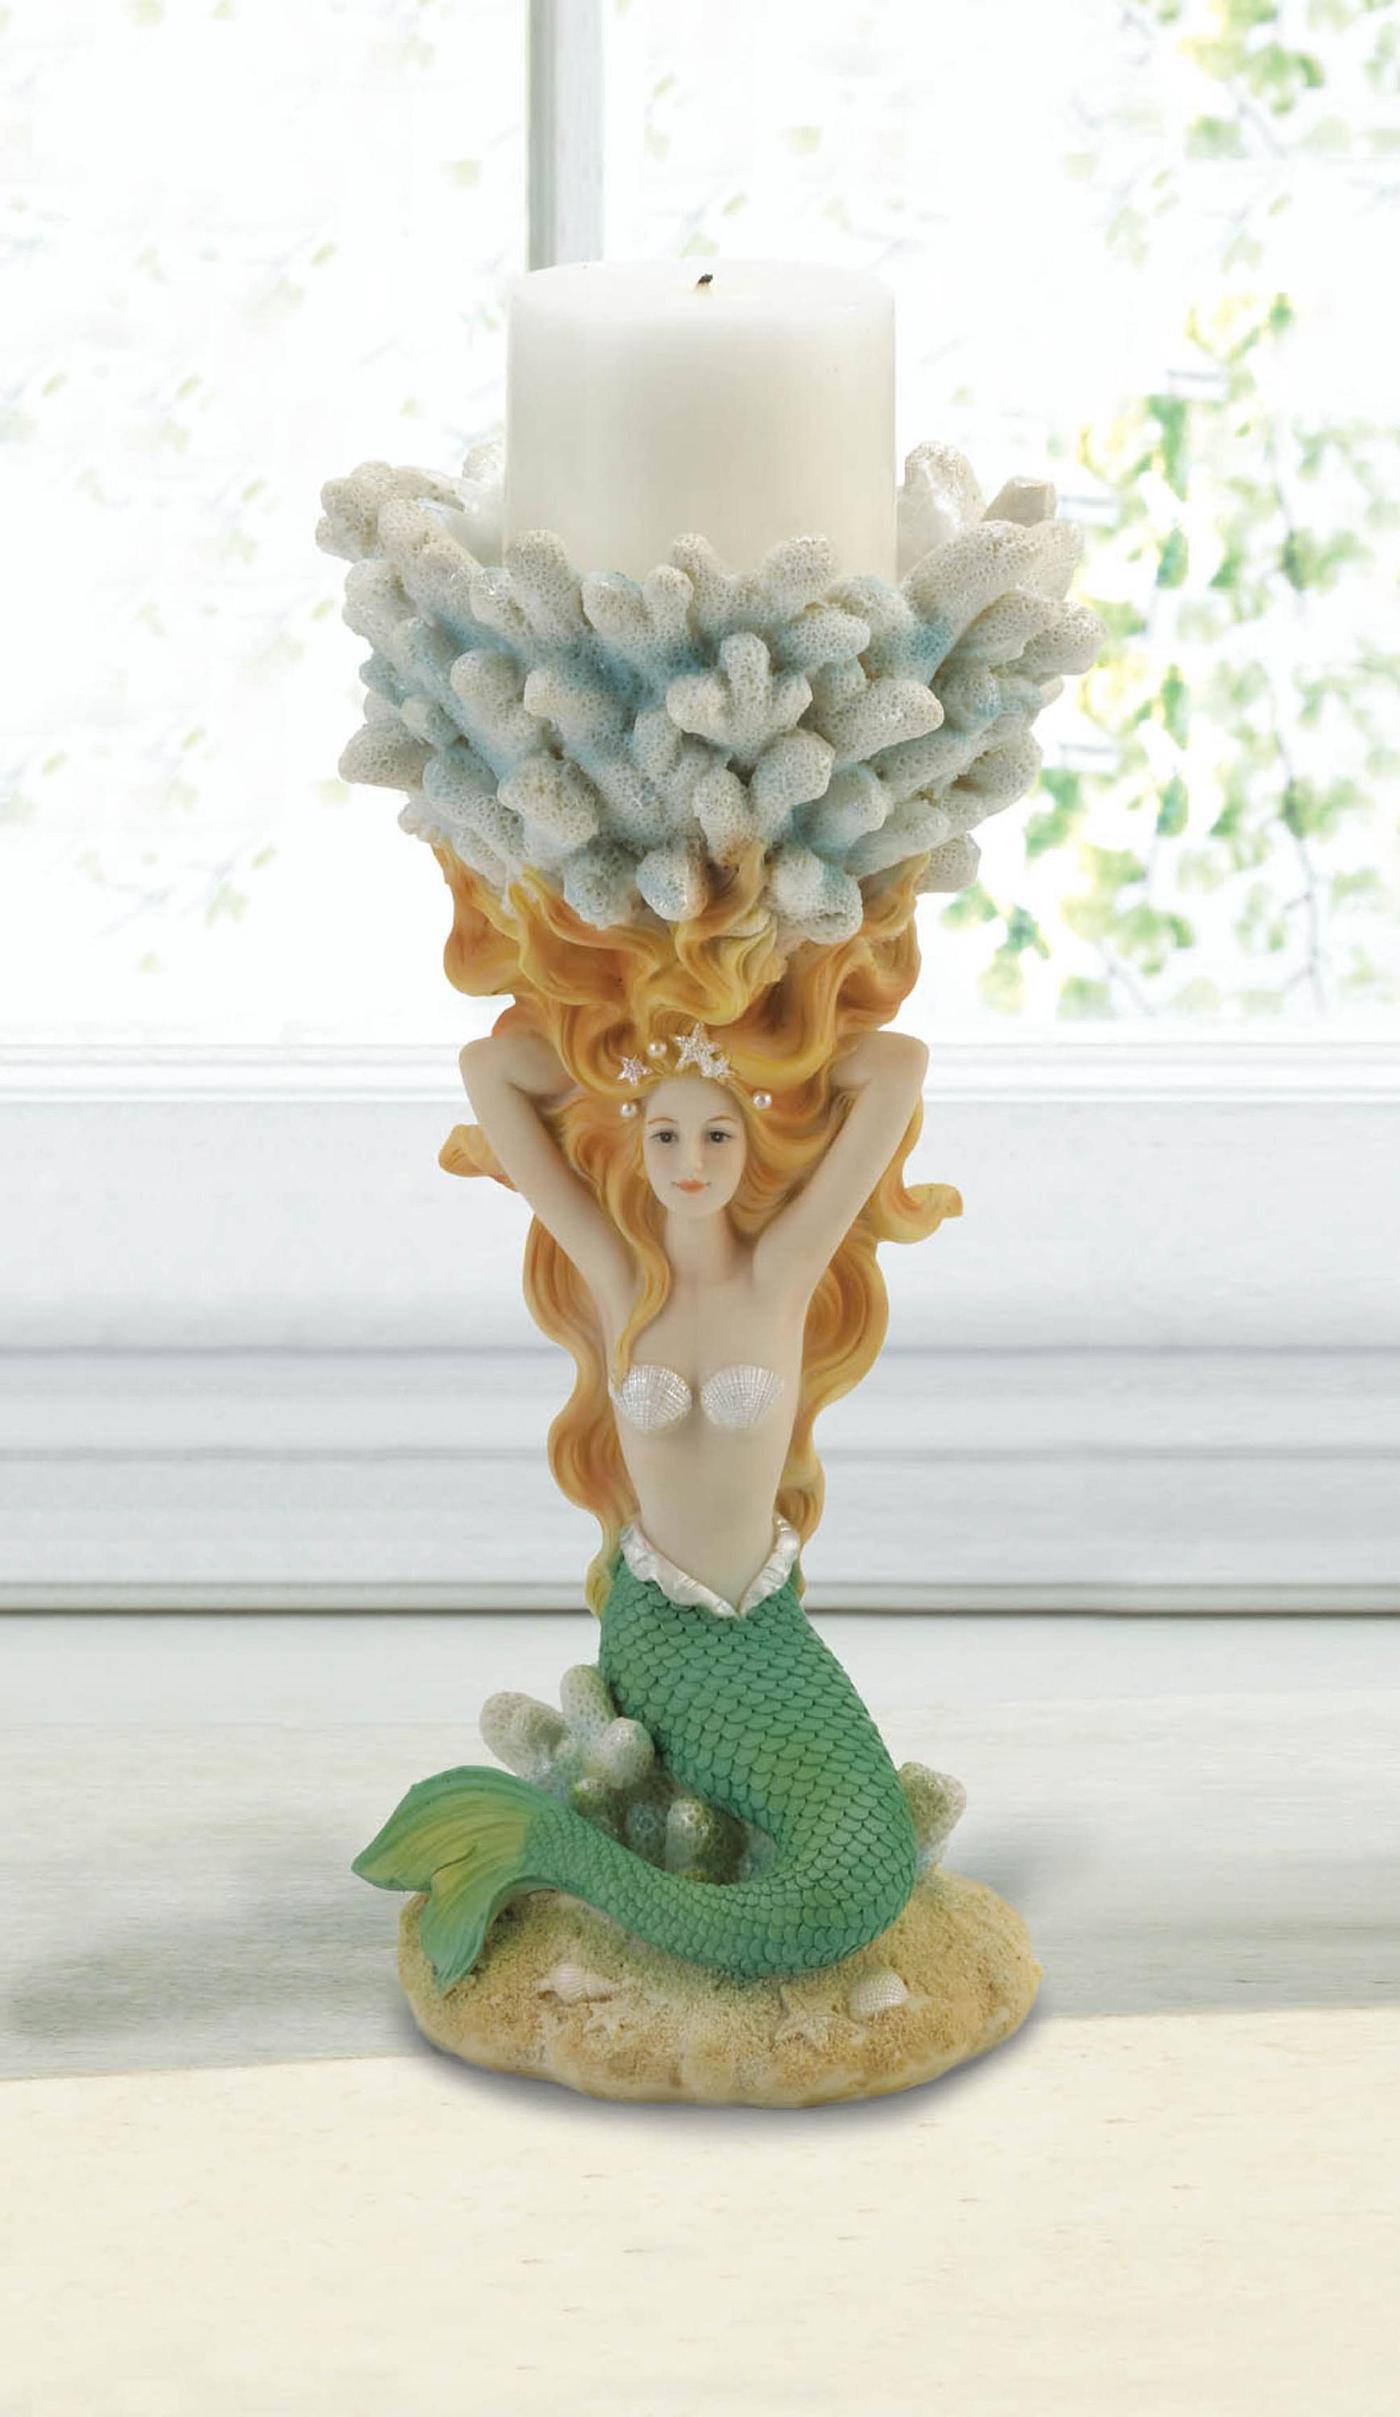 Grand Mermaid Candleholder